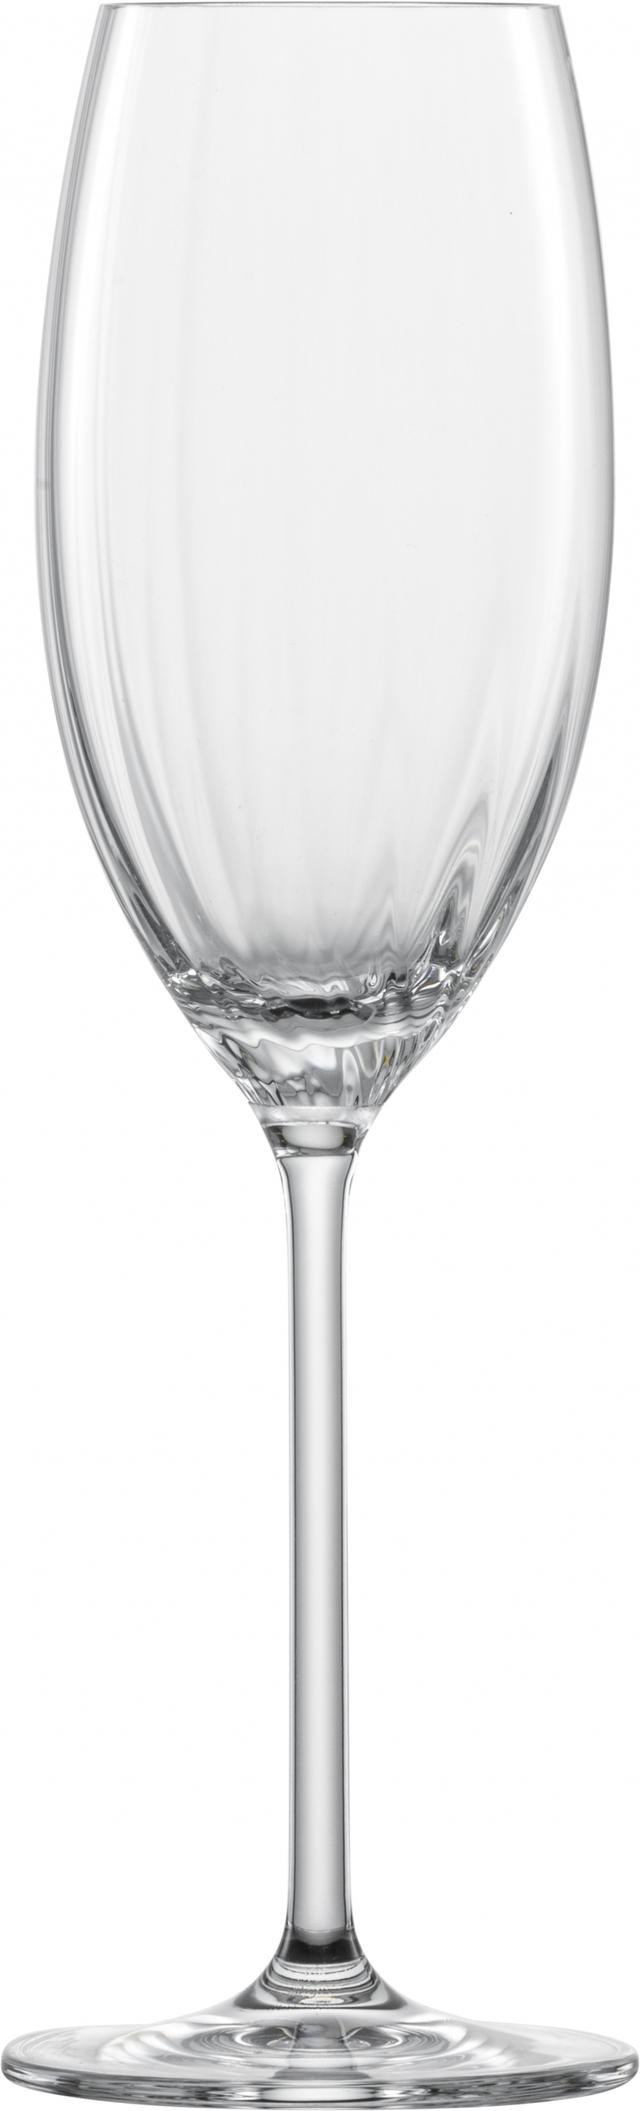 zwiesel glas prizma champagneglas met mp 77 - 0.288 ltr - geschenkverpakking 2 glazen